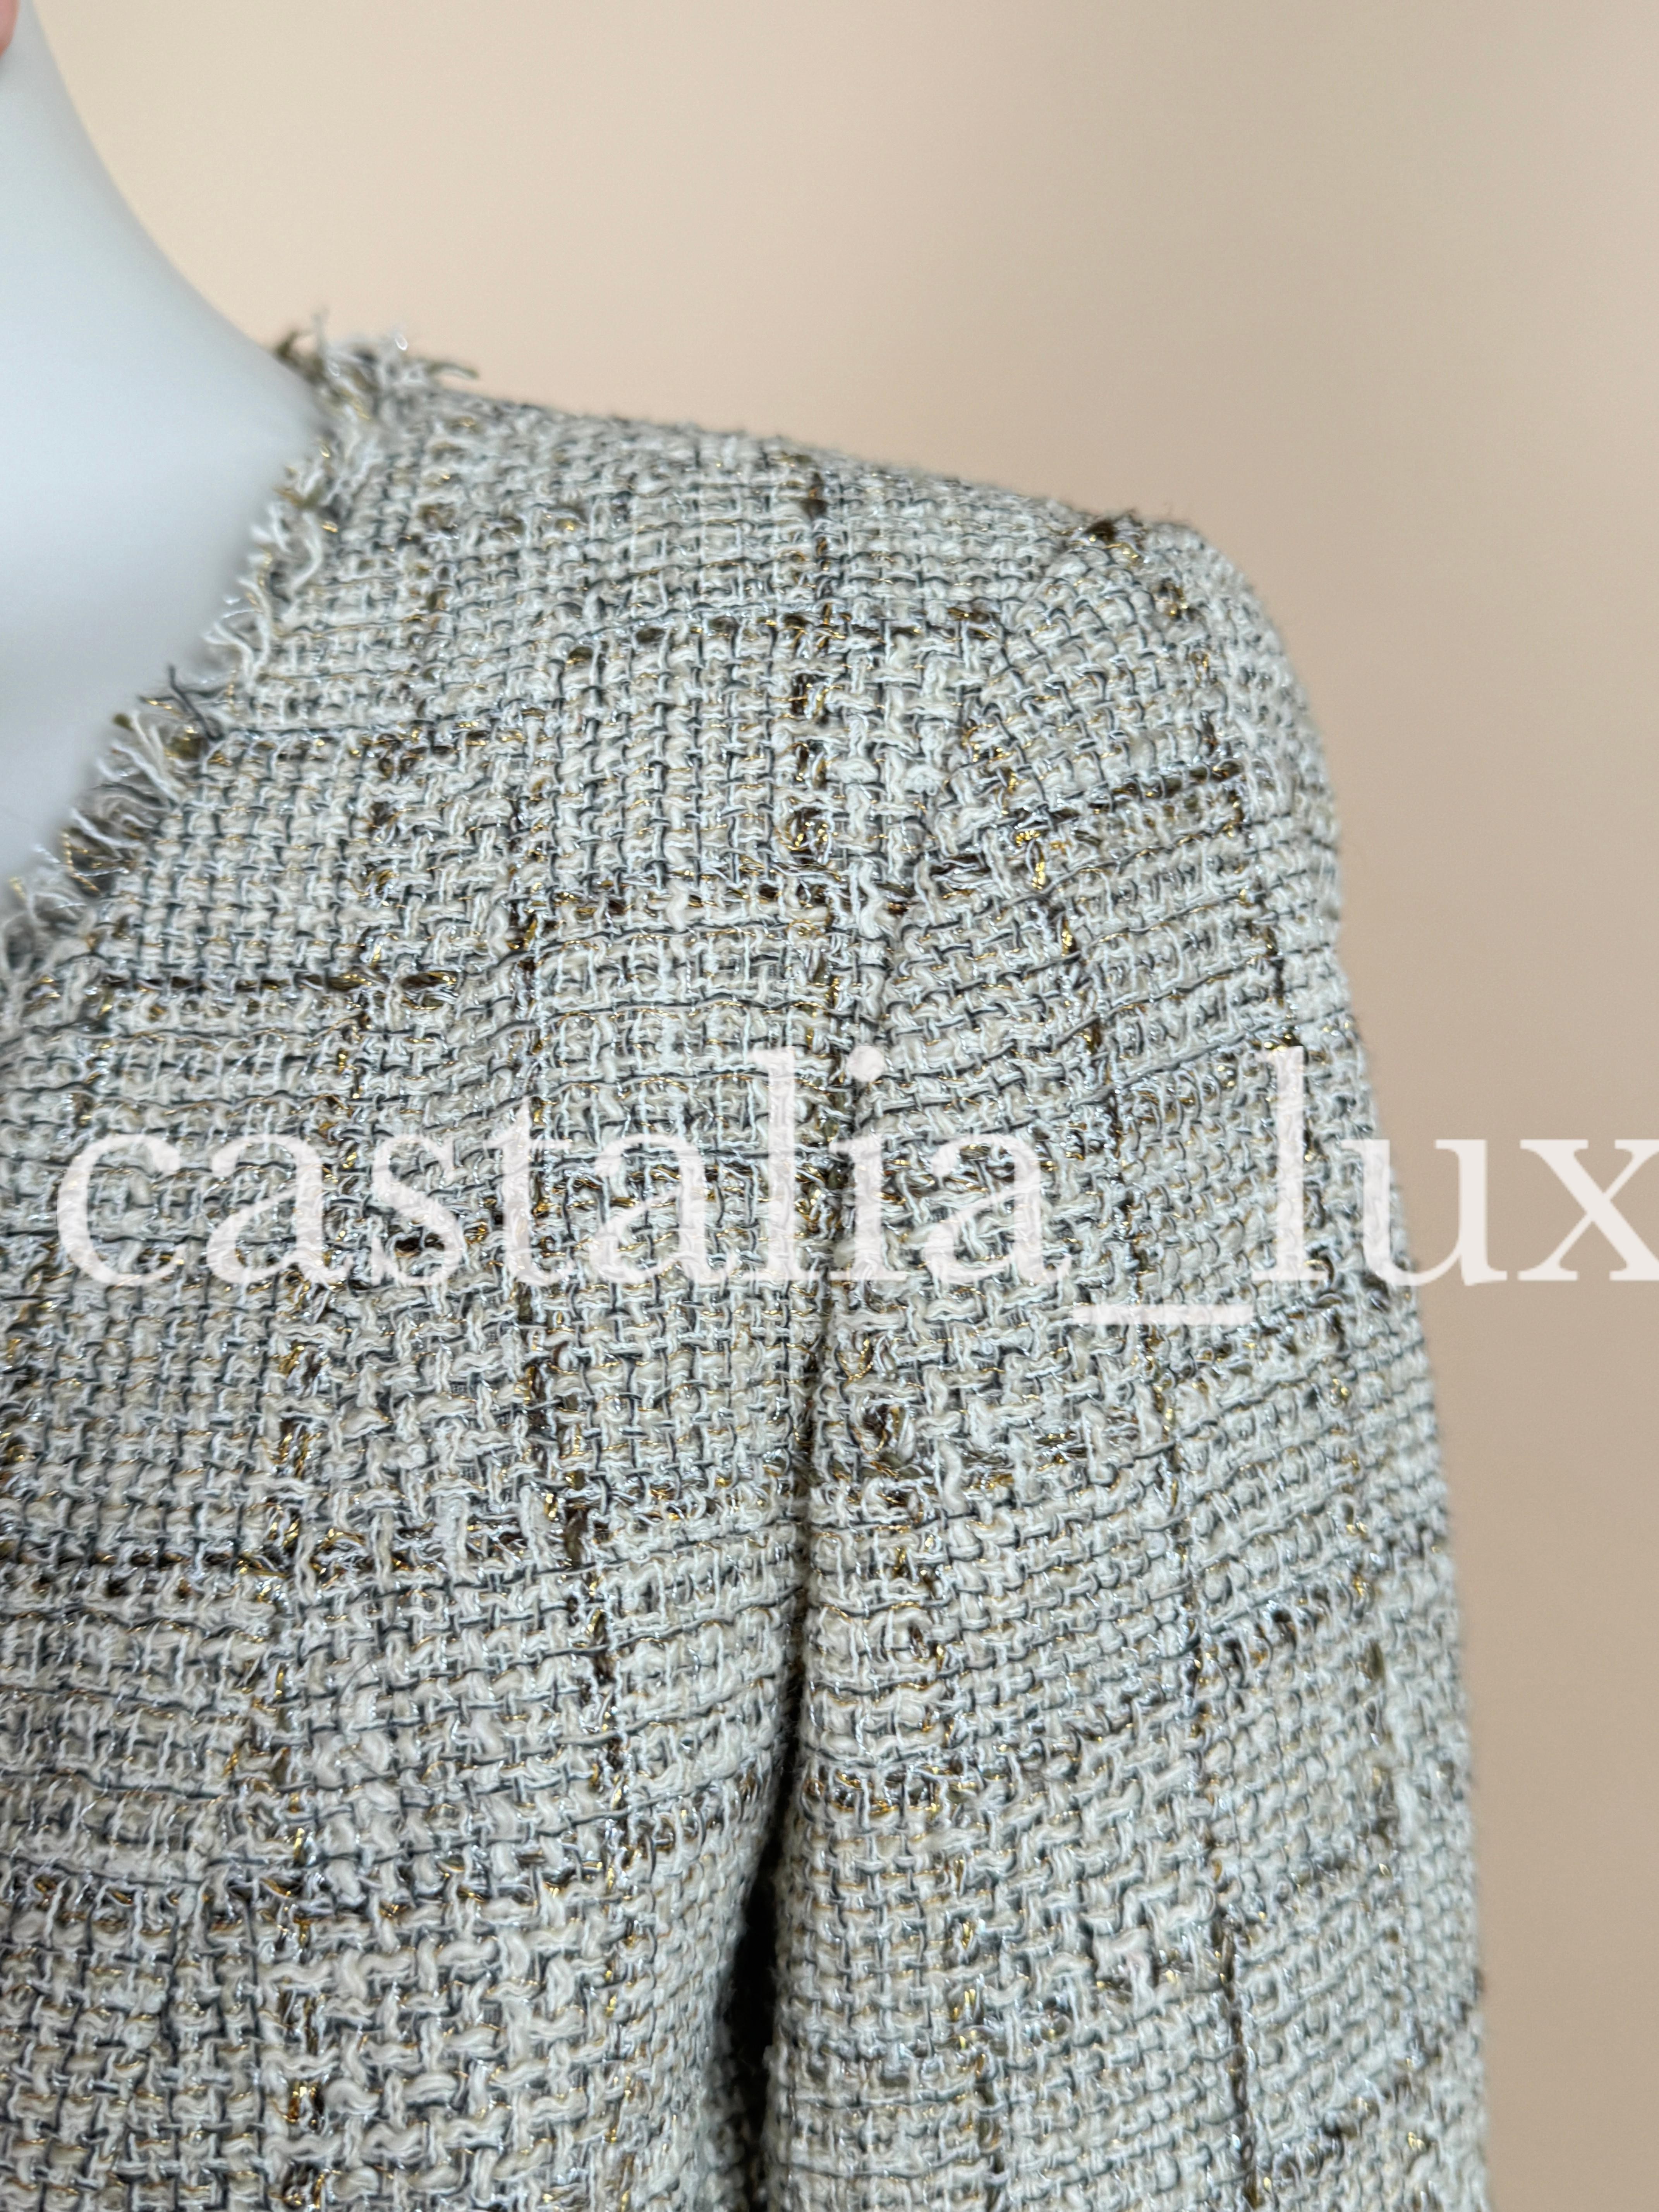 Chanel Gisele Bundchen Style Jewel Buttons Tweed Suit For Sale 14